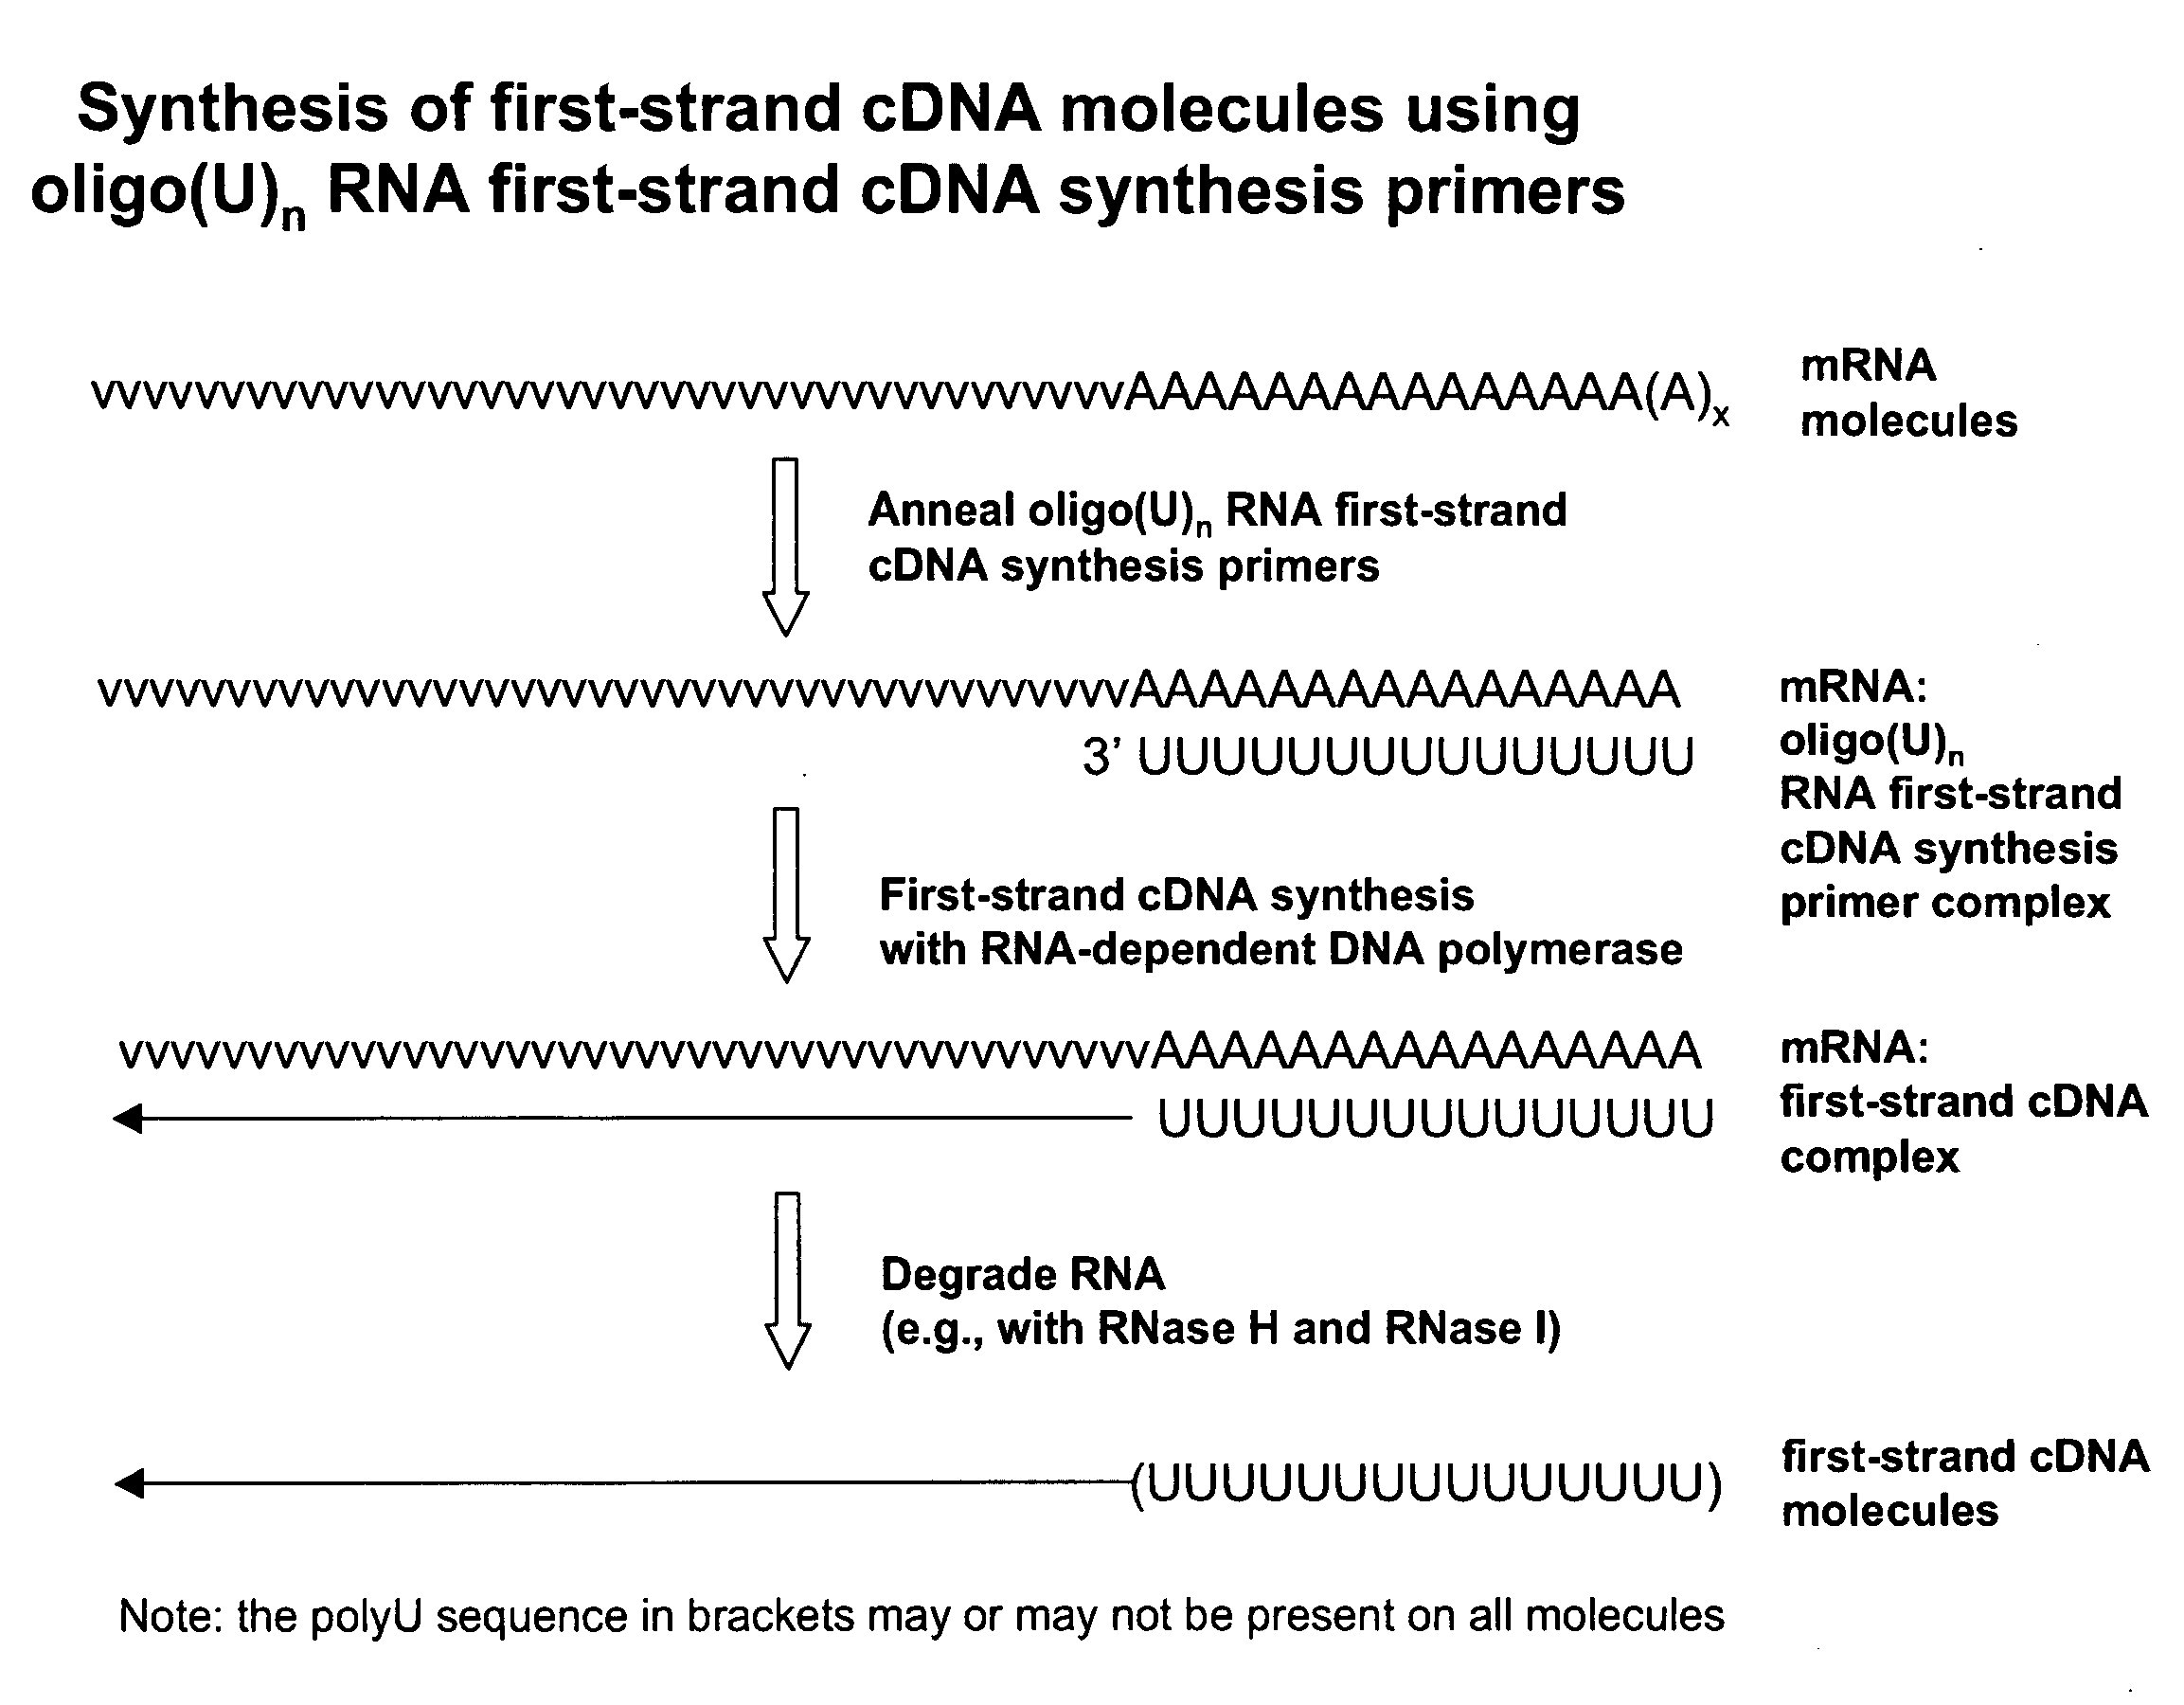 Copy DNA and sense RNA